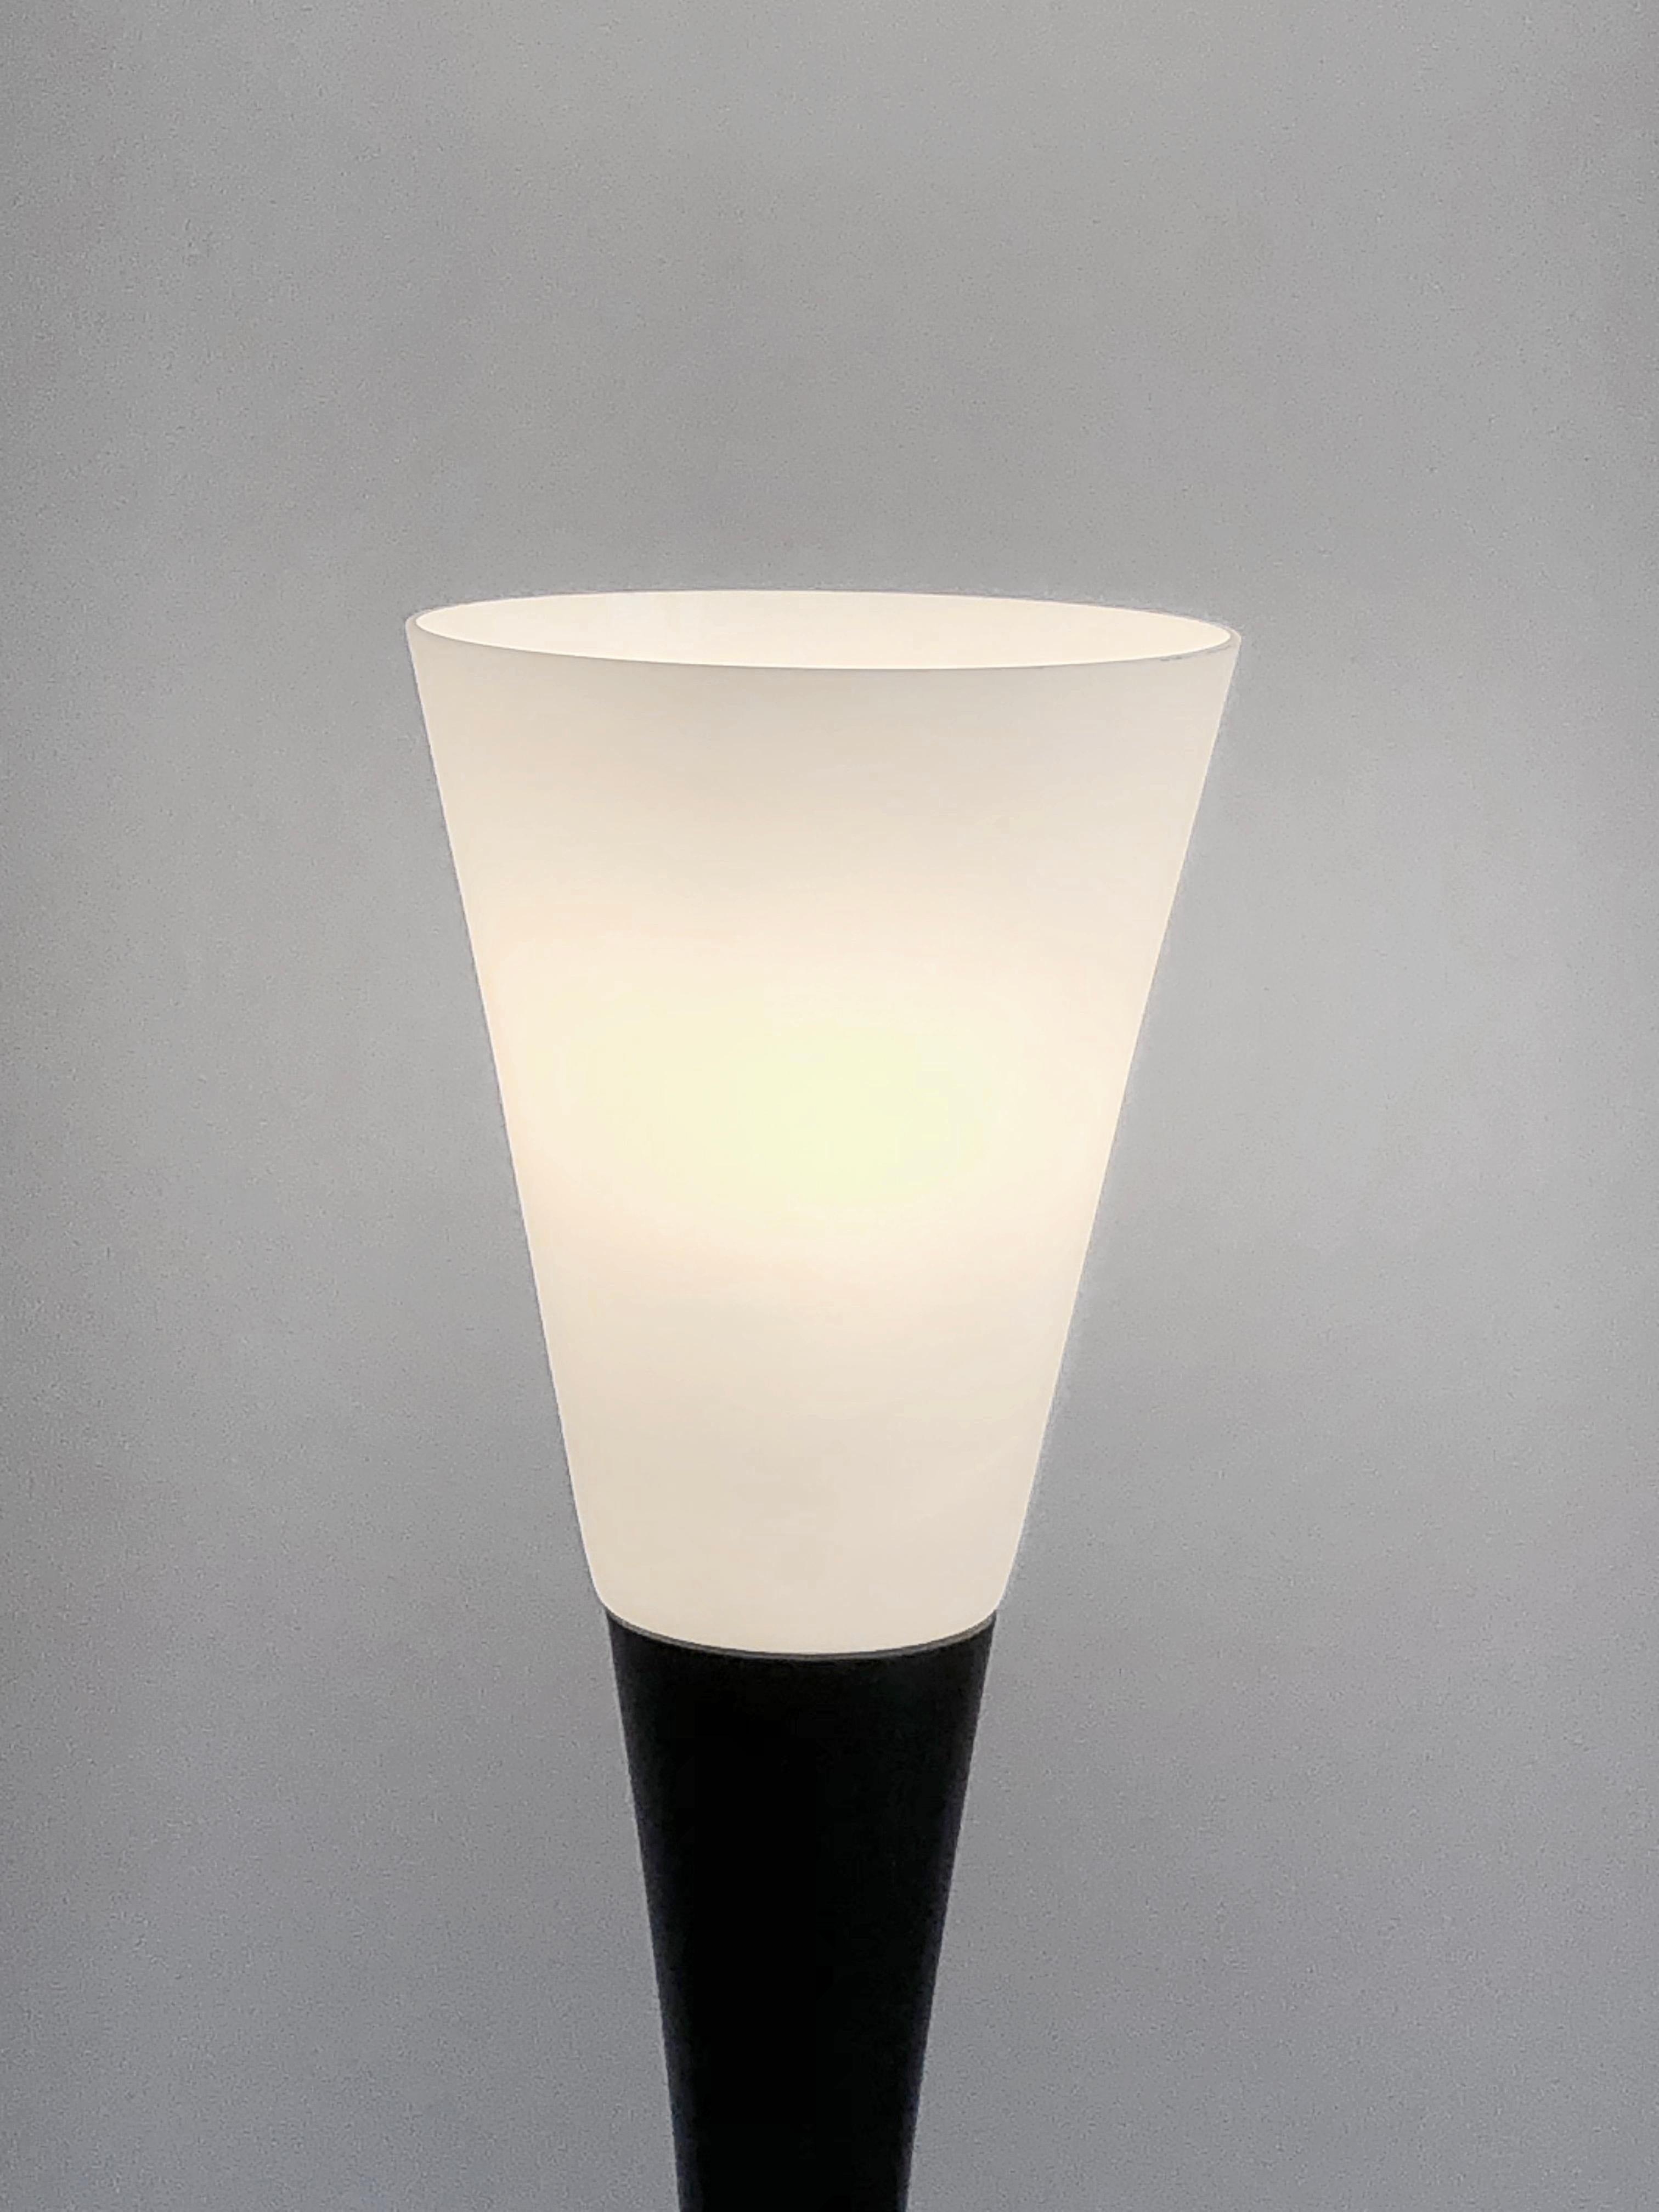 Mid-20th Century A FREE-FORM FLOOR LAMP MODEL J1 by JOSEPH-ANDRE MOTTE for DISDEROT, France 1950 For Sale